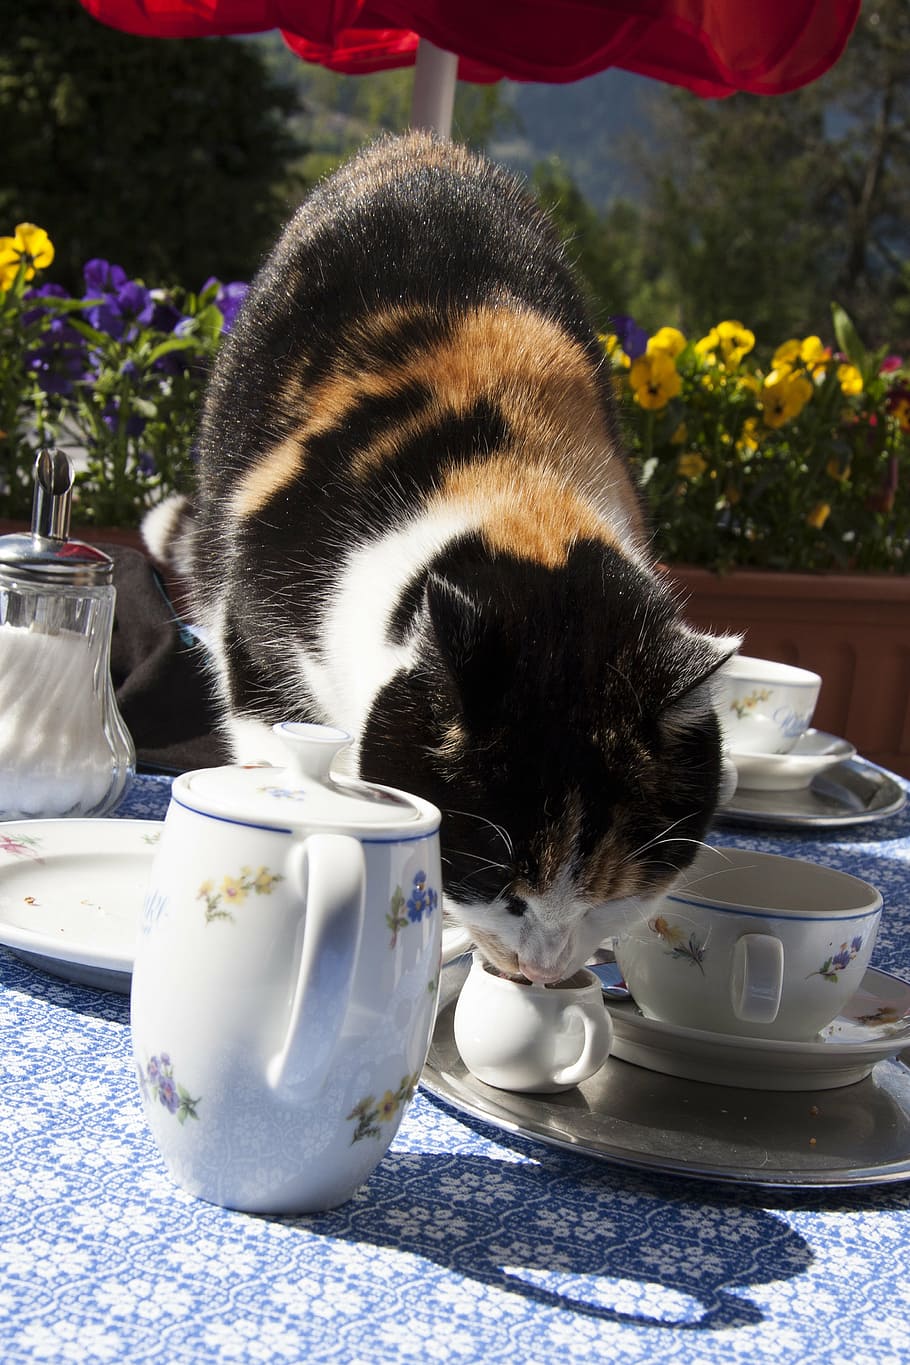 belacu, minum kucing, cangkir teh, kucing, gigi manis, menjilat, bandit susu, sarapan, kopi, kafe